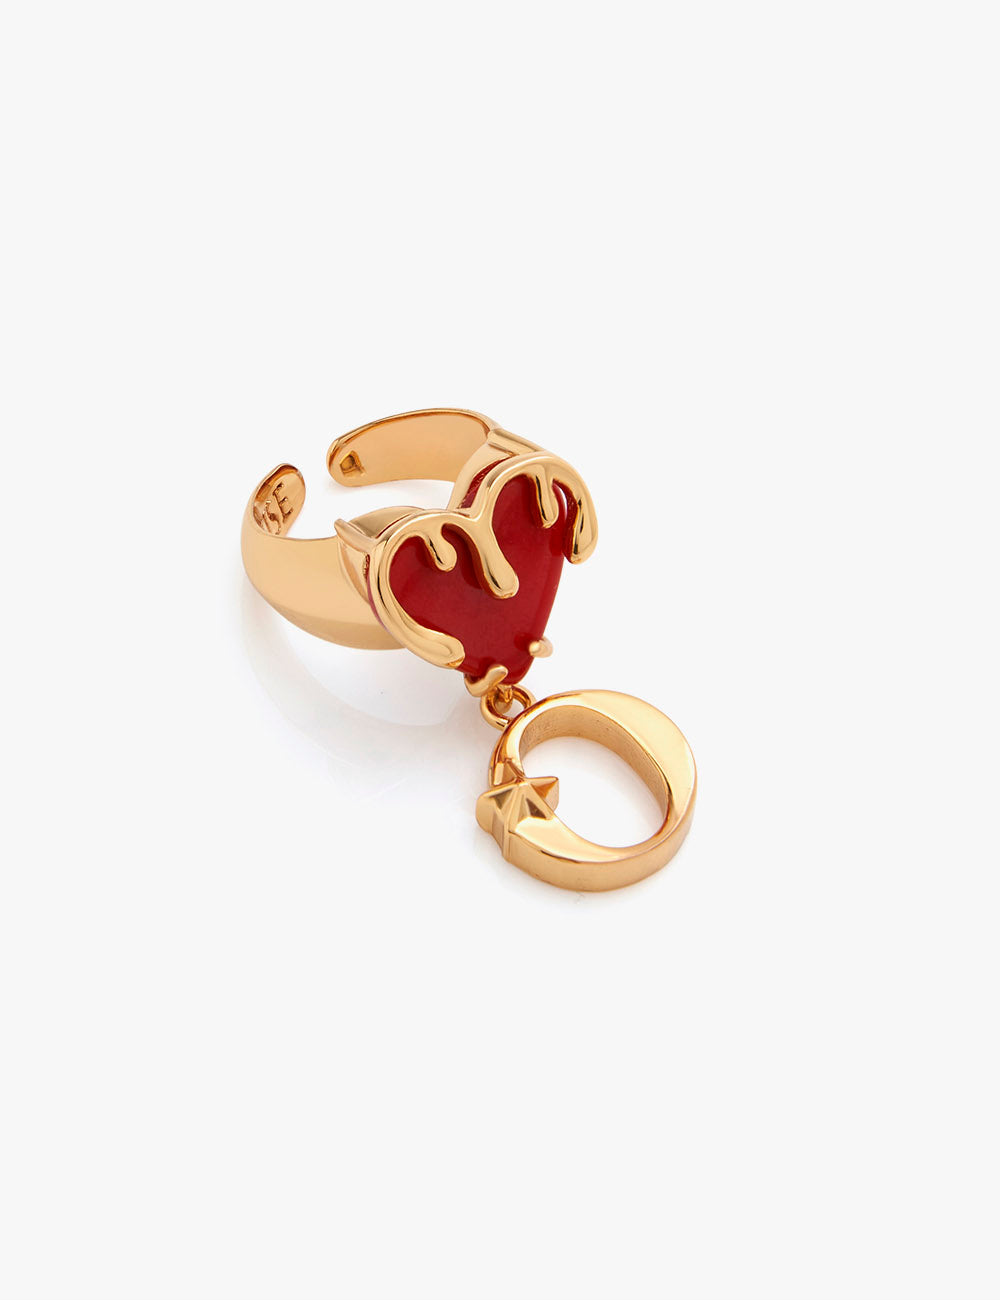 18k Solid Yellow Gold Mountain 3 Diamond Ring Fine Women Birthday Gift  Jewelry | eBay